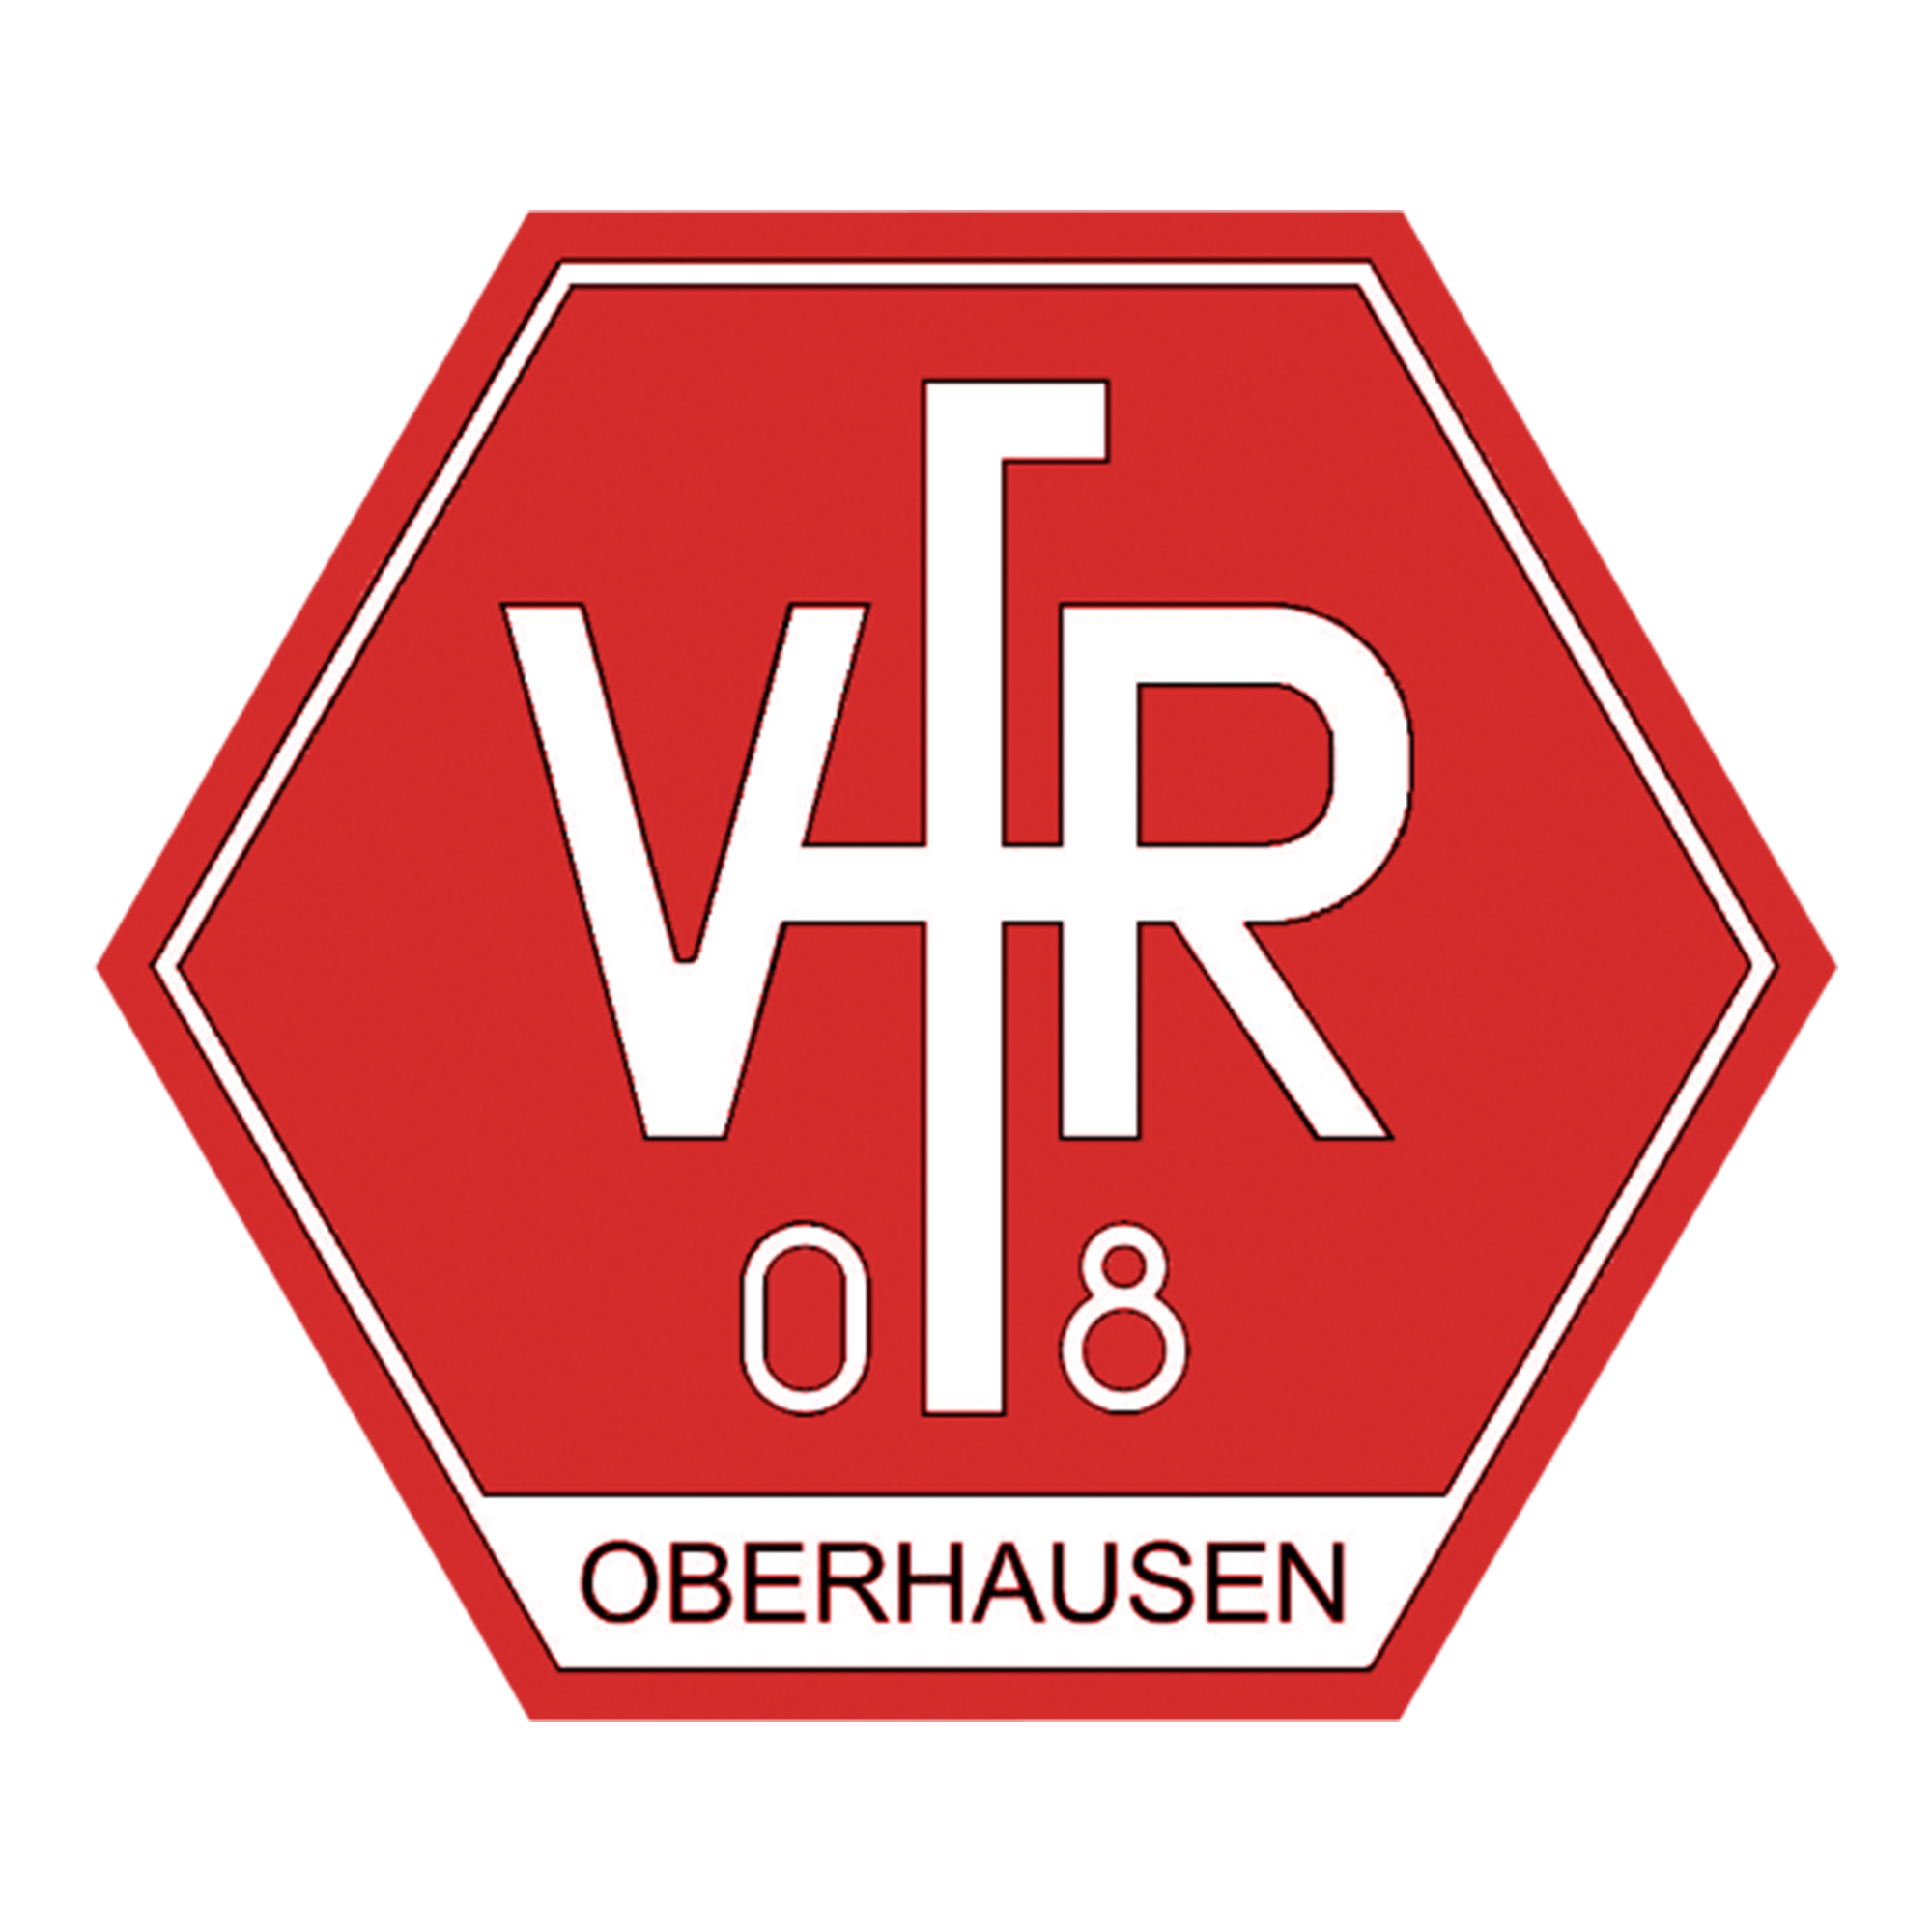 VfR 08 Oberhausen e.V.